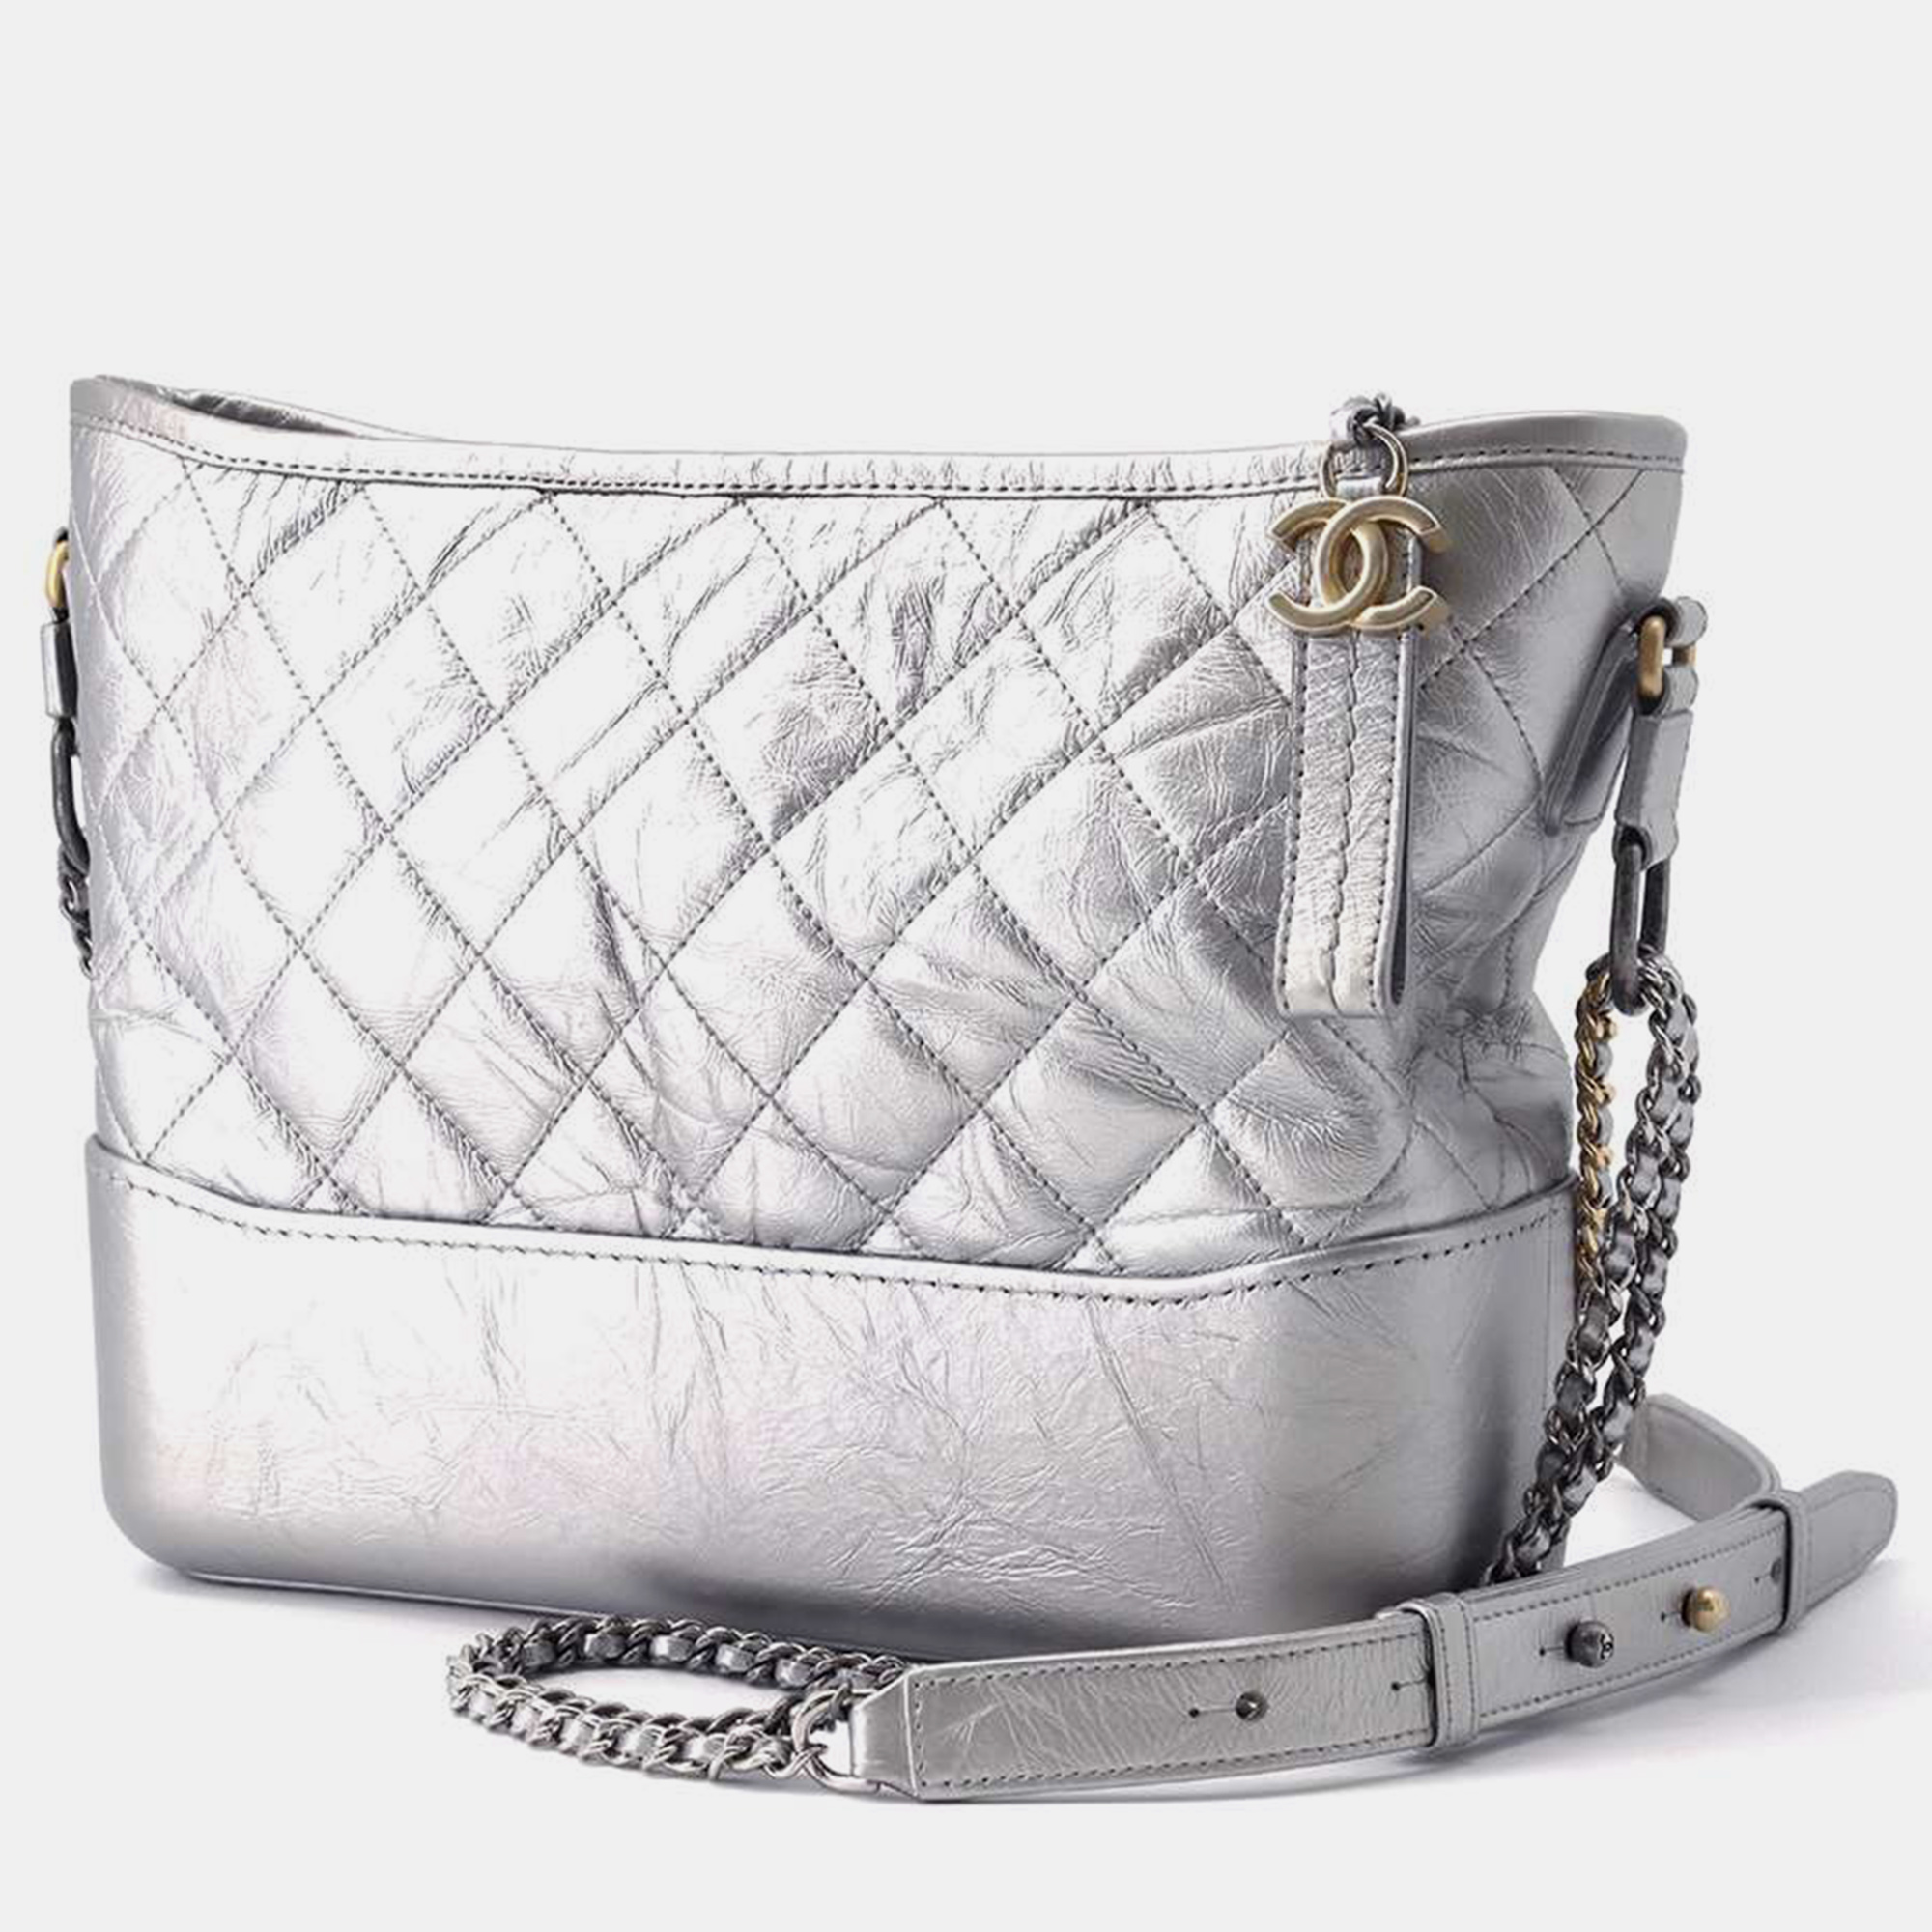 Chanel silver leather medium gabrielle hobo bag